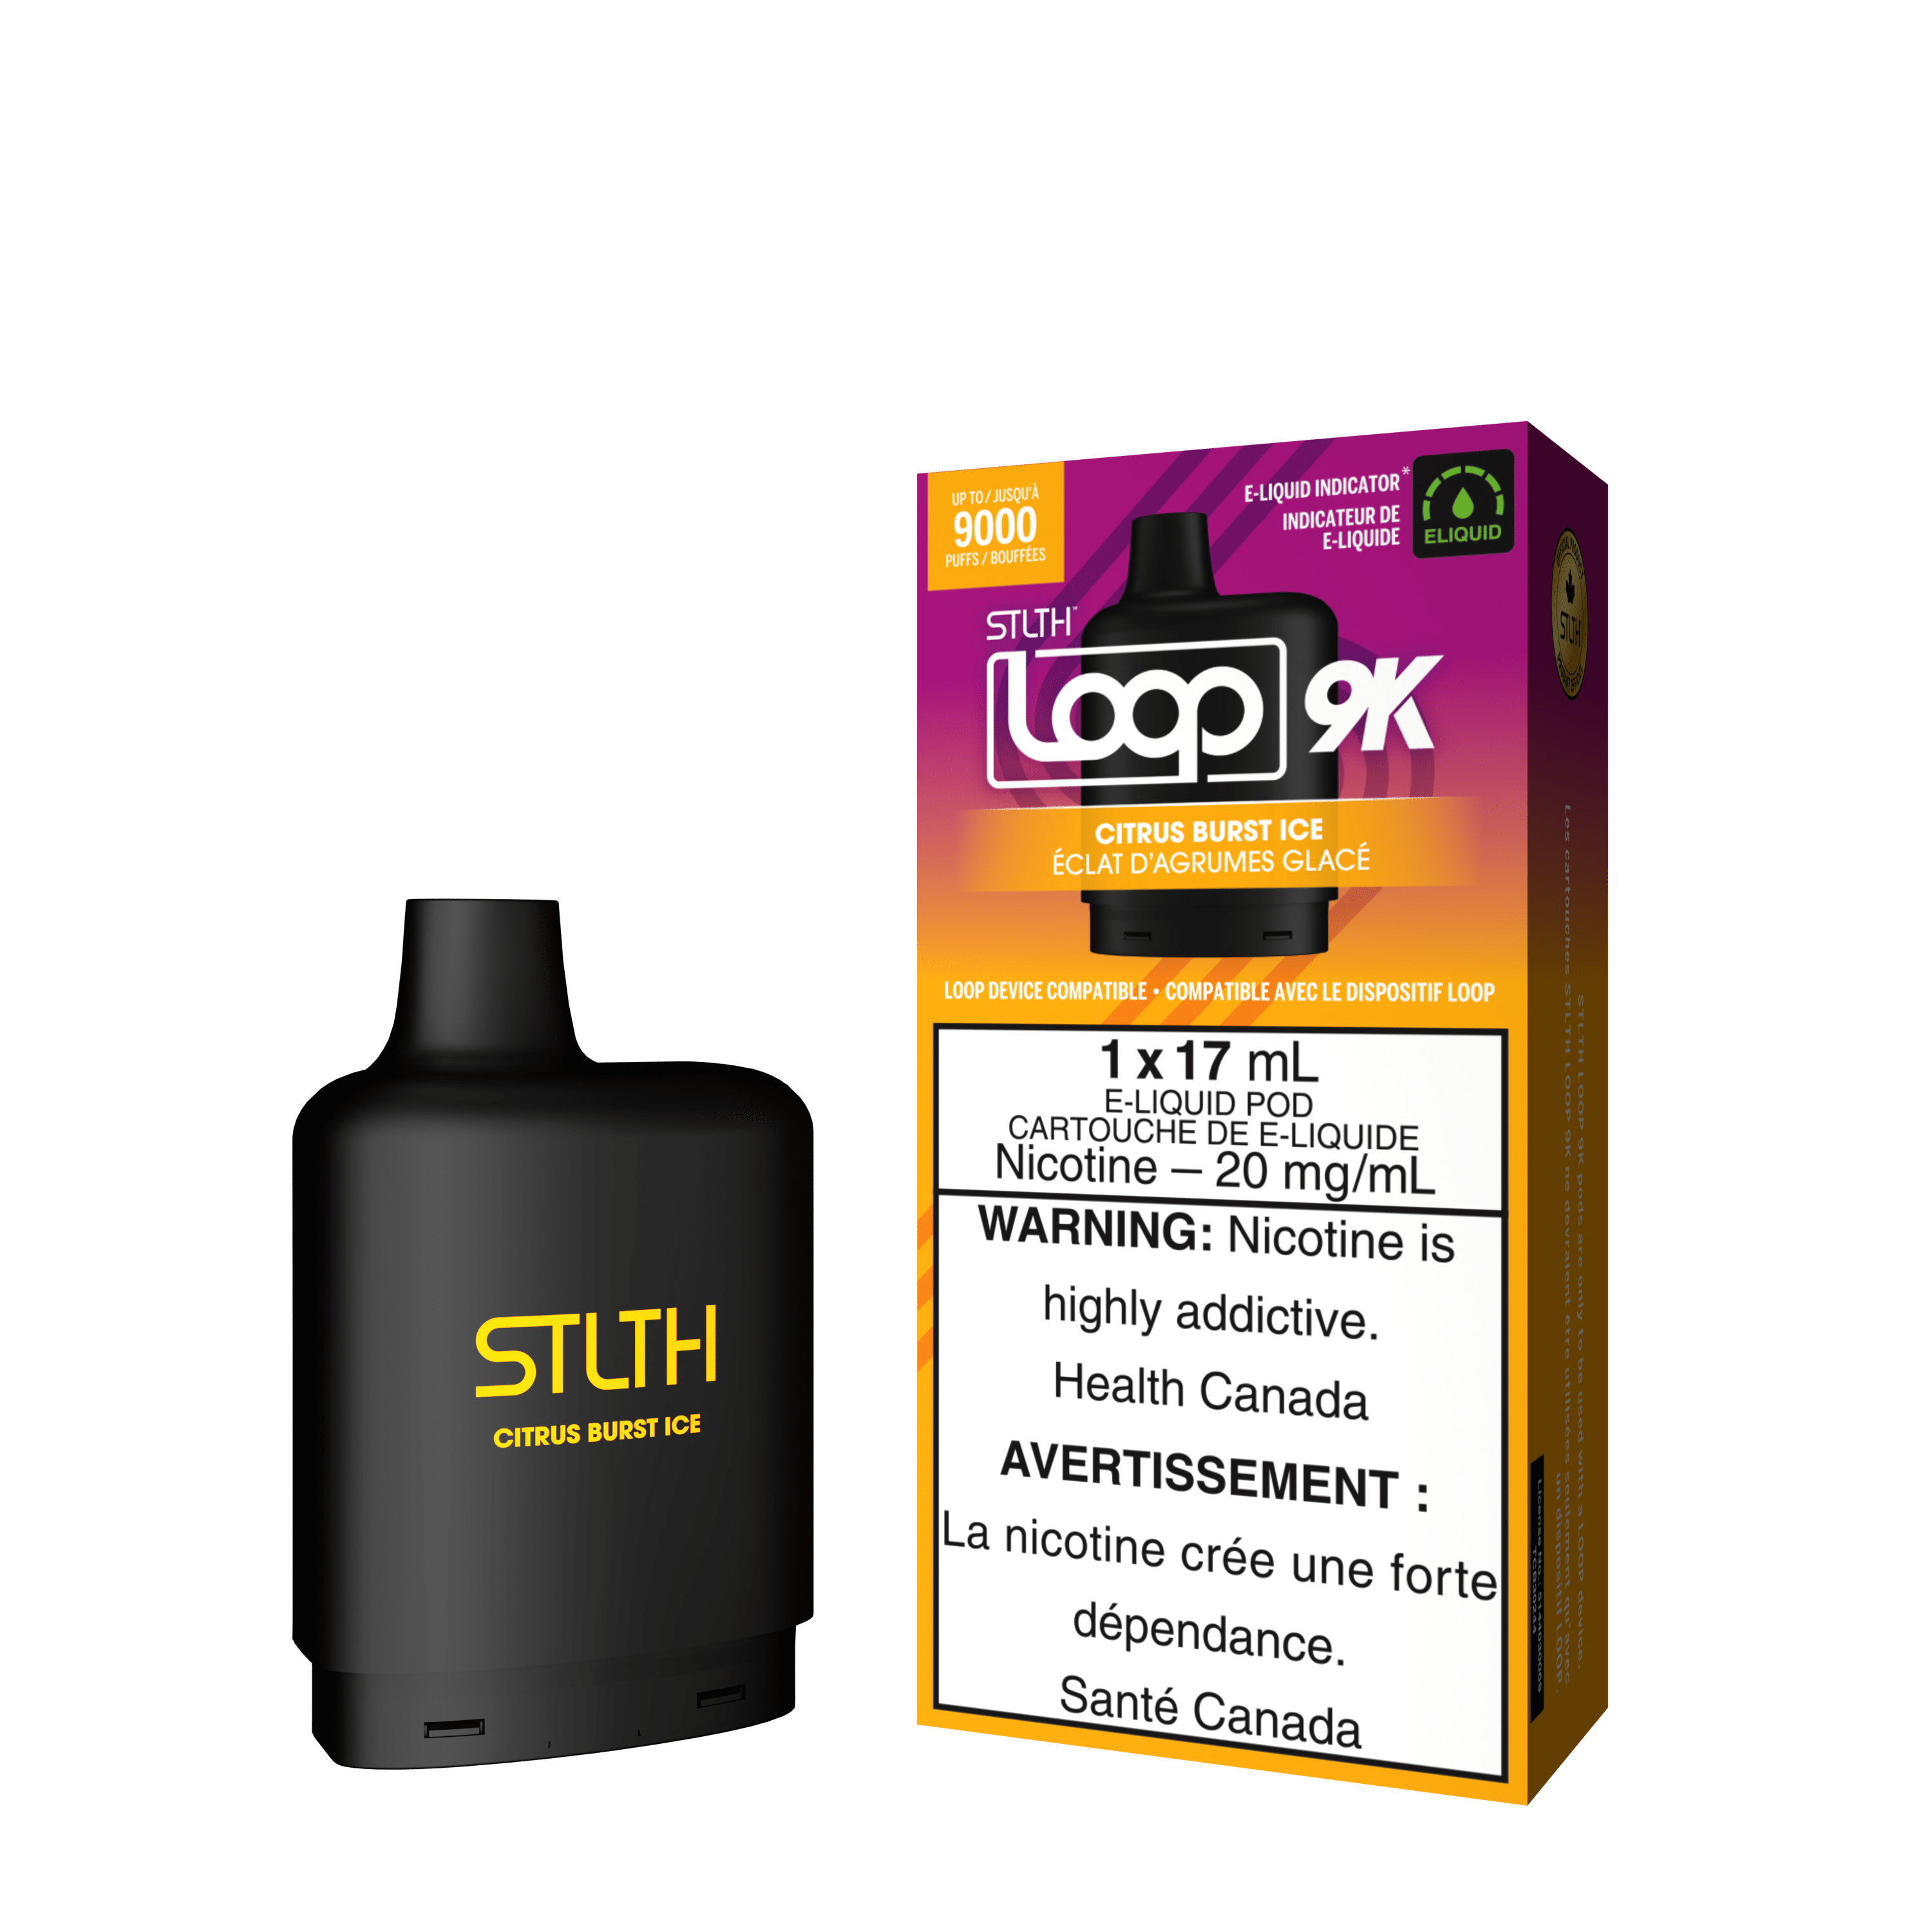 STLTH Loop 9K Pod - Citrus Burst Ice available on Canada online vape shop